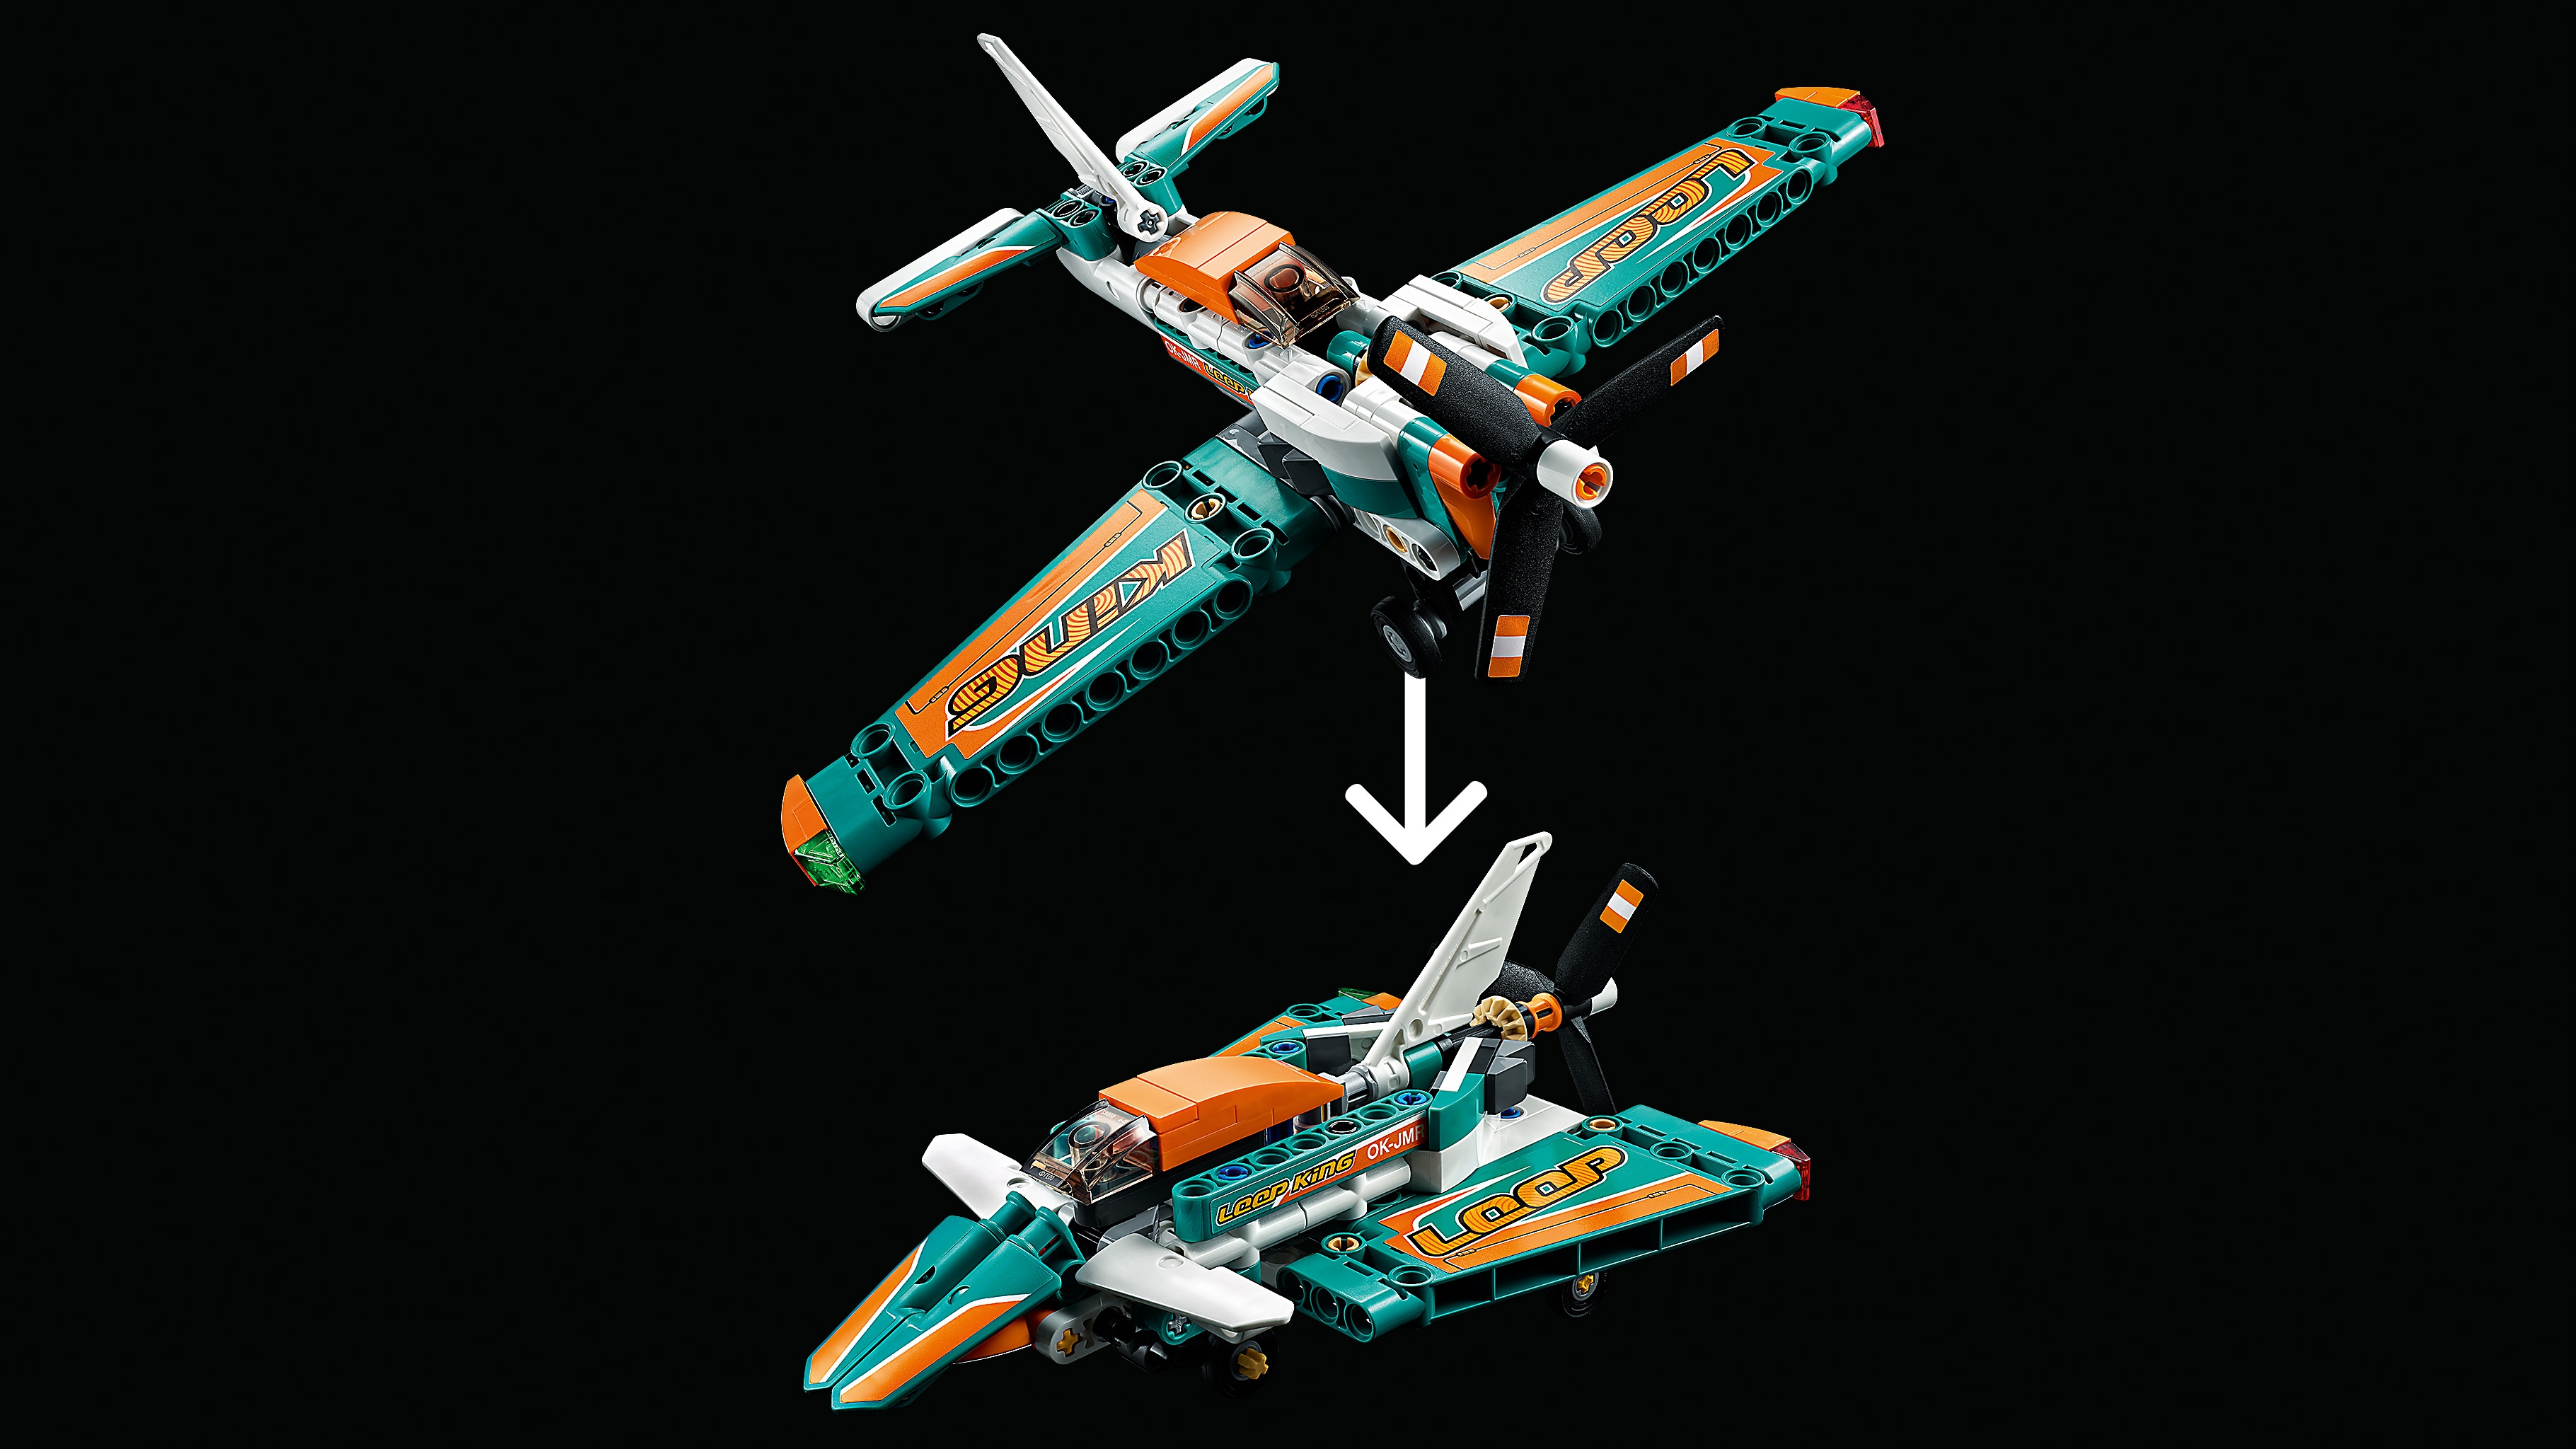 LEGO TECHNIC 42117 Technic Race Plane  .BRAND NEW SEALED